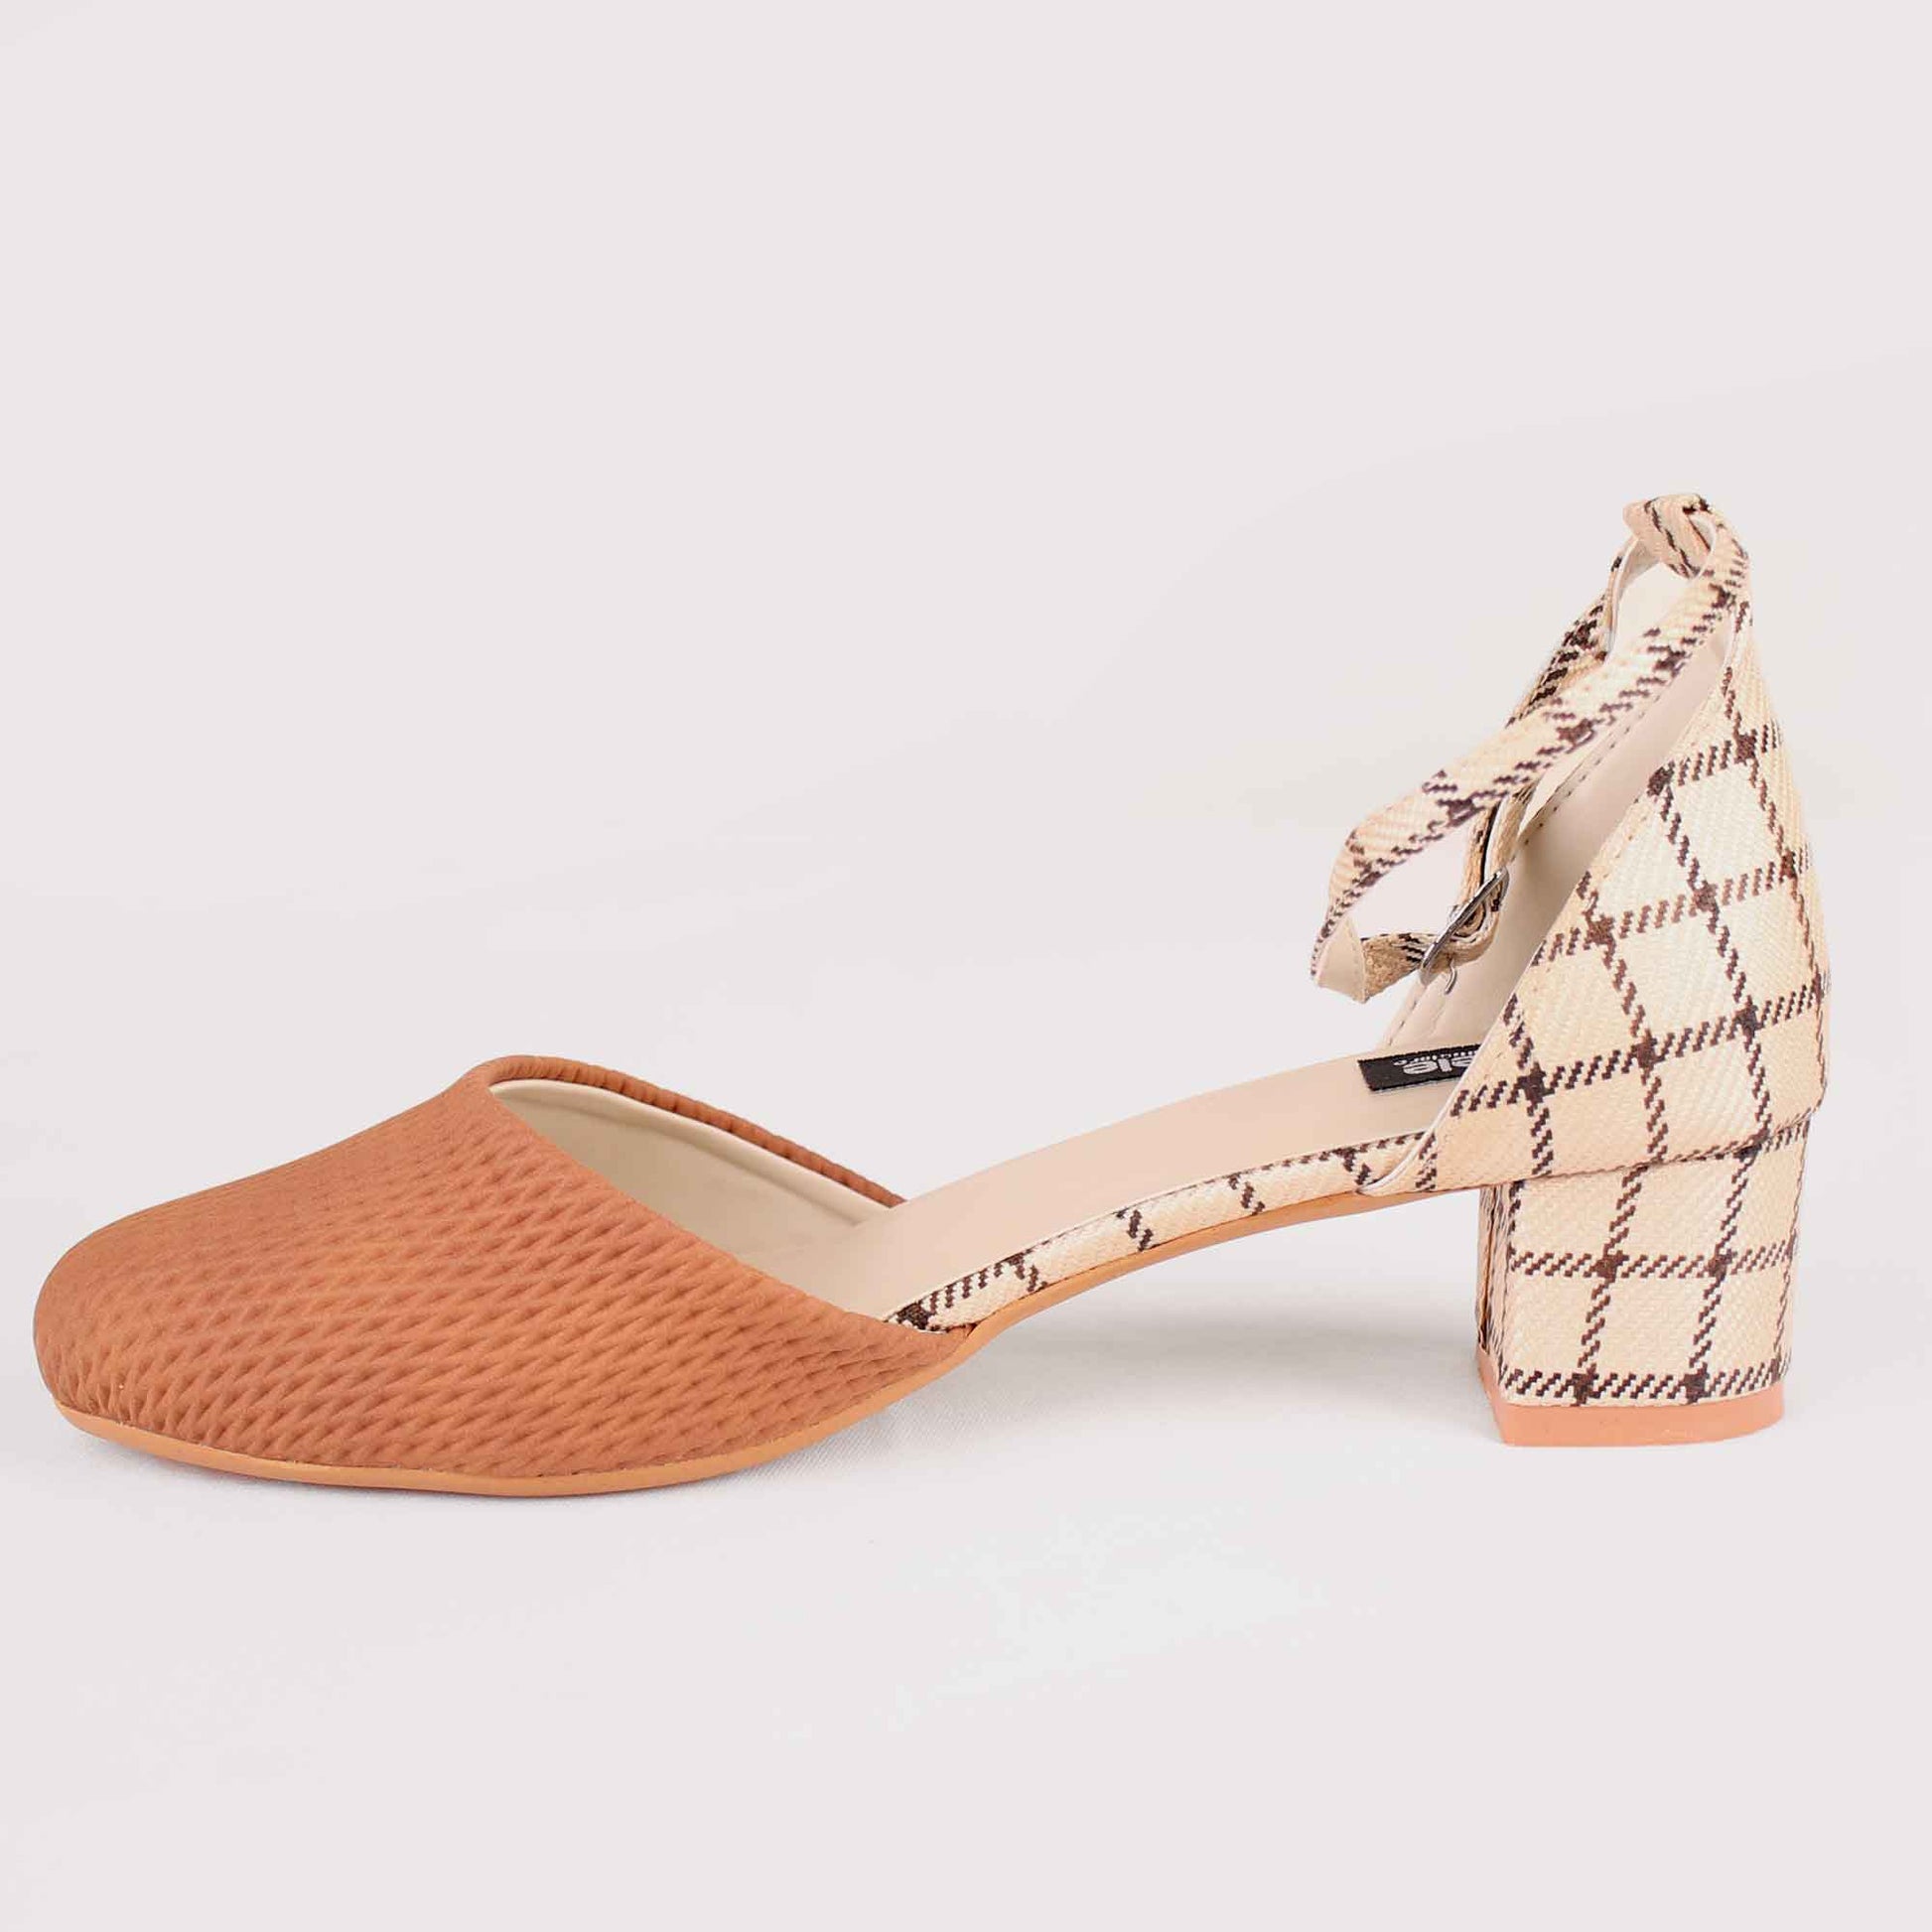 Foot Wear,The Interweave Checked Tan Block Heels - Cippele Multi Store